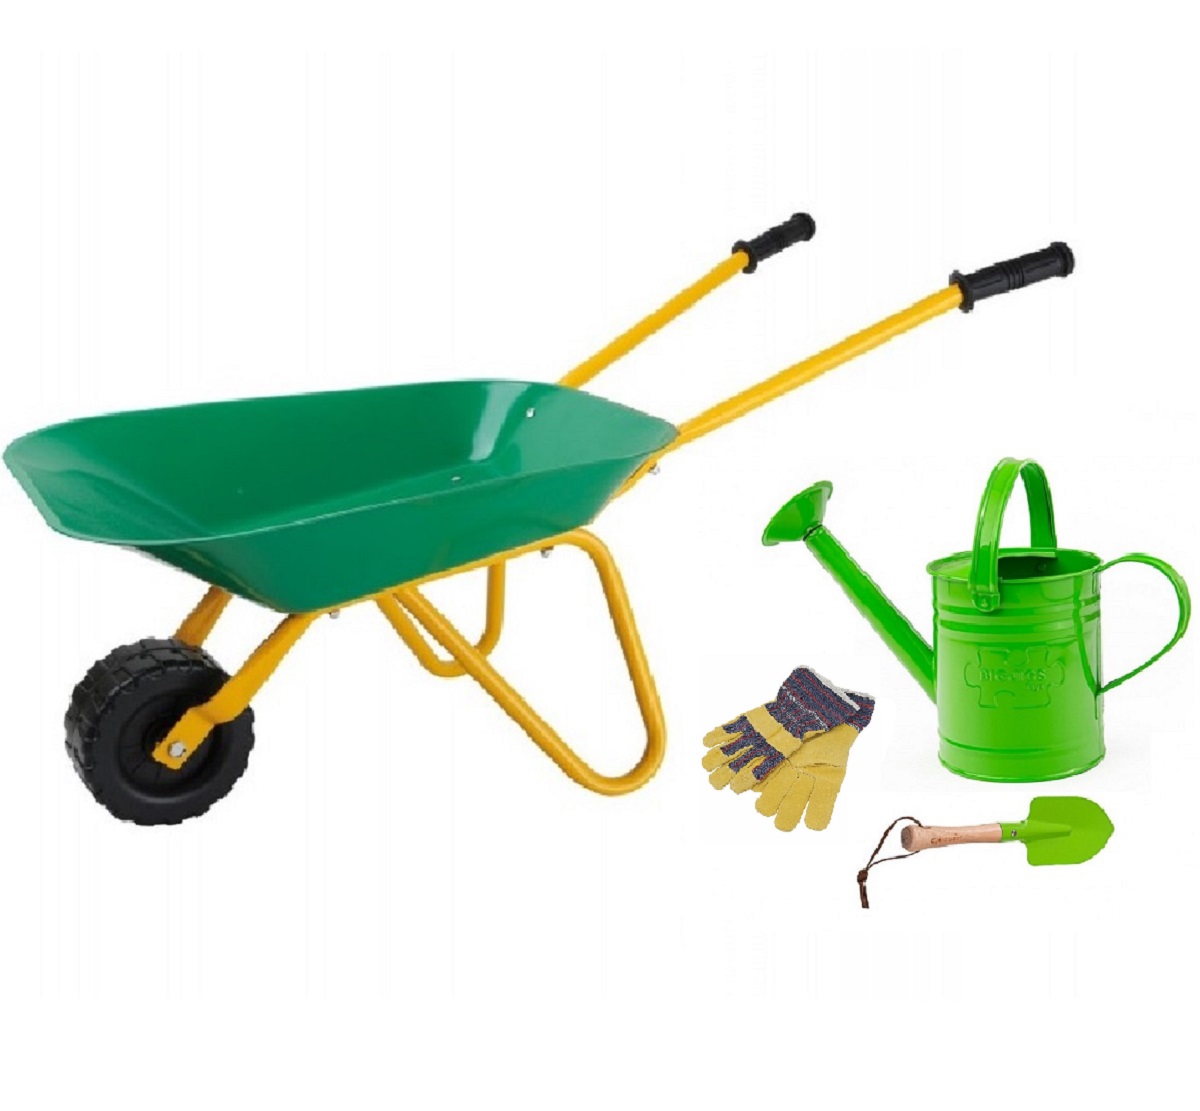 Children's Gardening tools, Watering Can u0026 Wheelbarrow Set